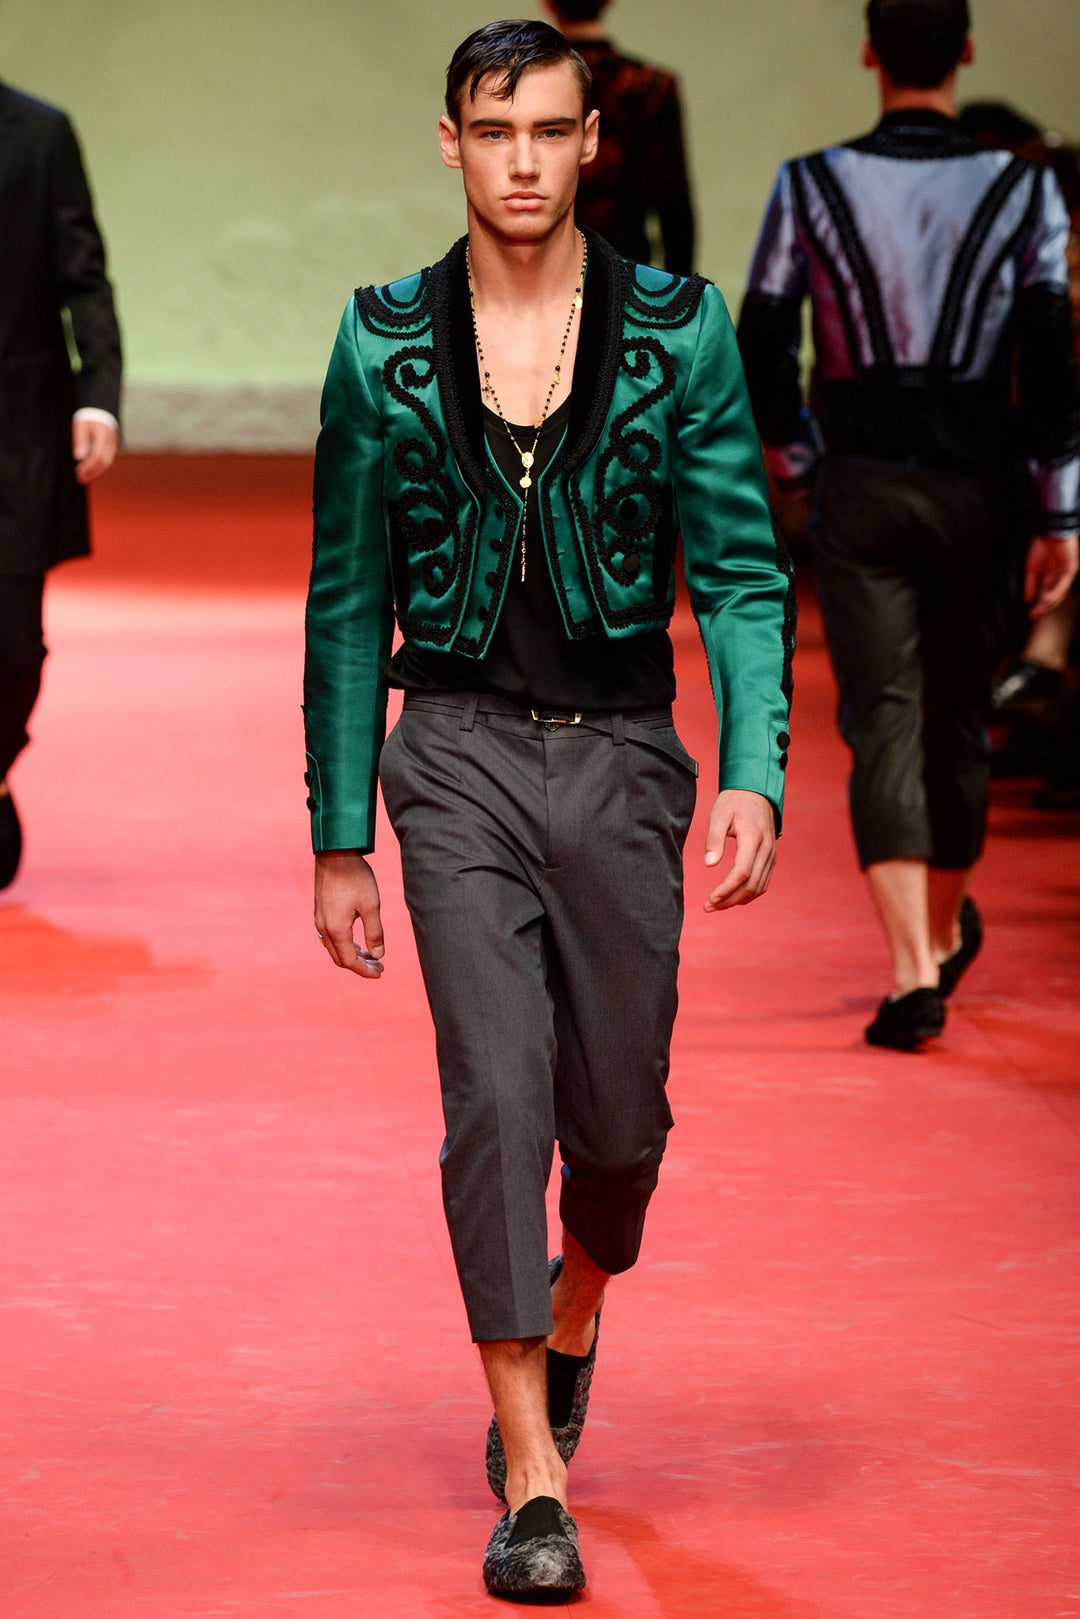 DOLCE & GABBANA S/S 15 Size 44 Emerald & Black Applique Silk Cropped Bull Fighter Jacket